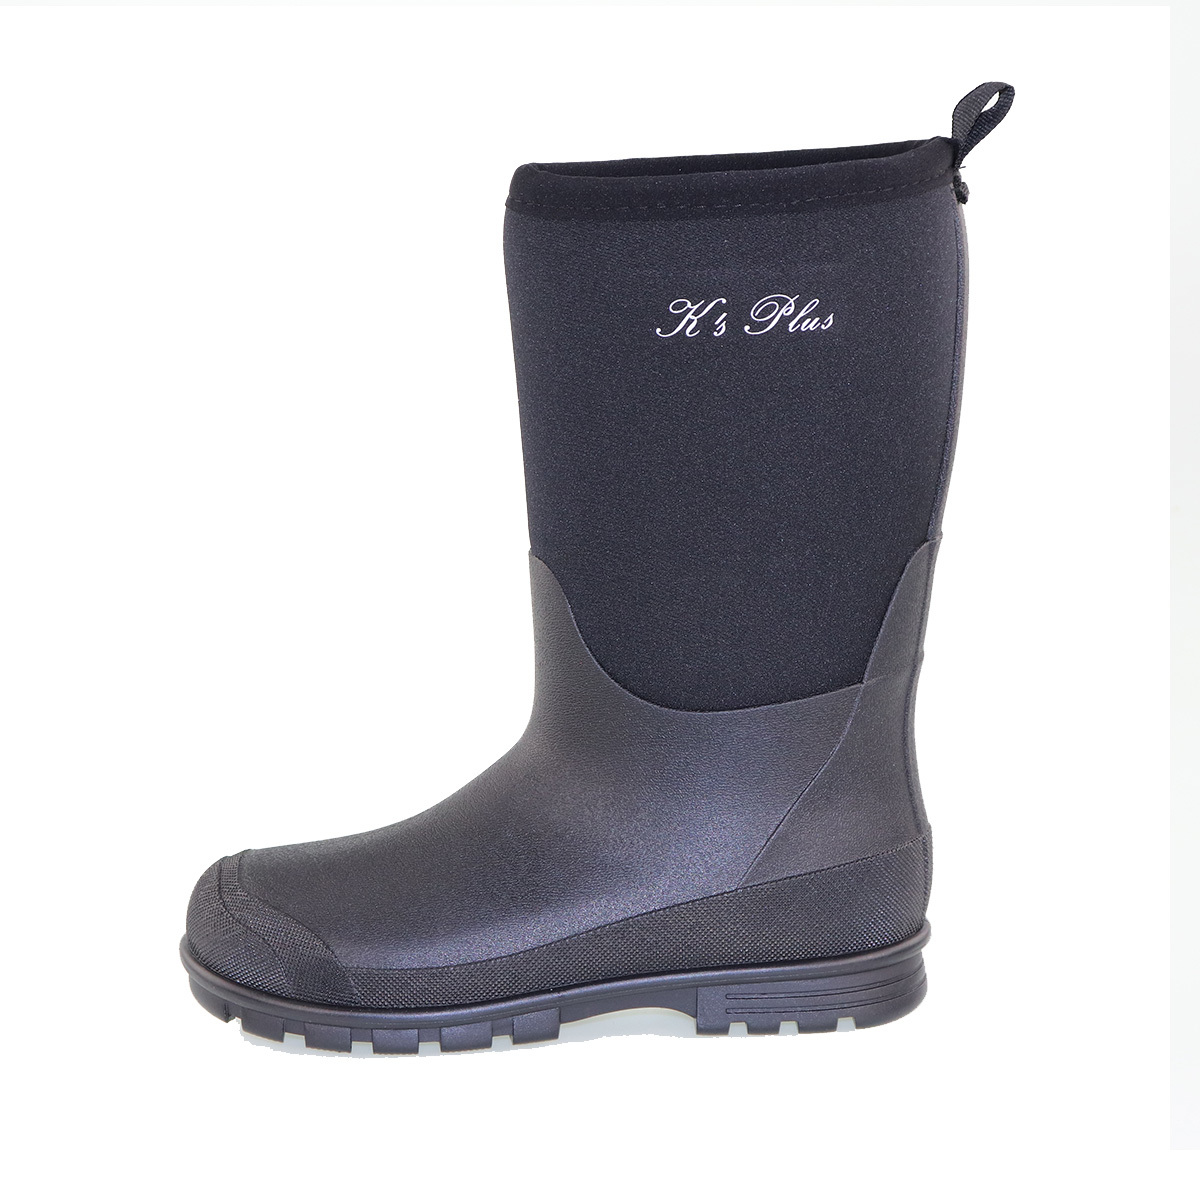 [ new goods unused ] for children boots black 15.0cm black 21077